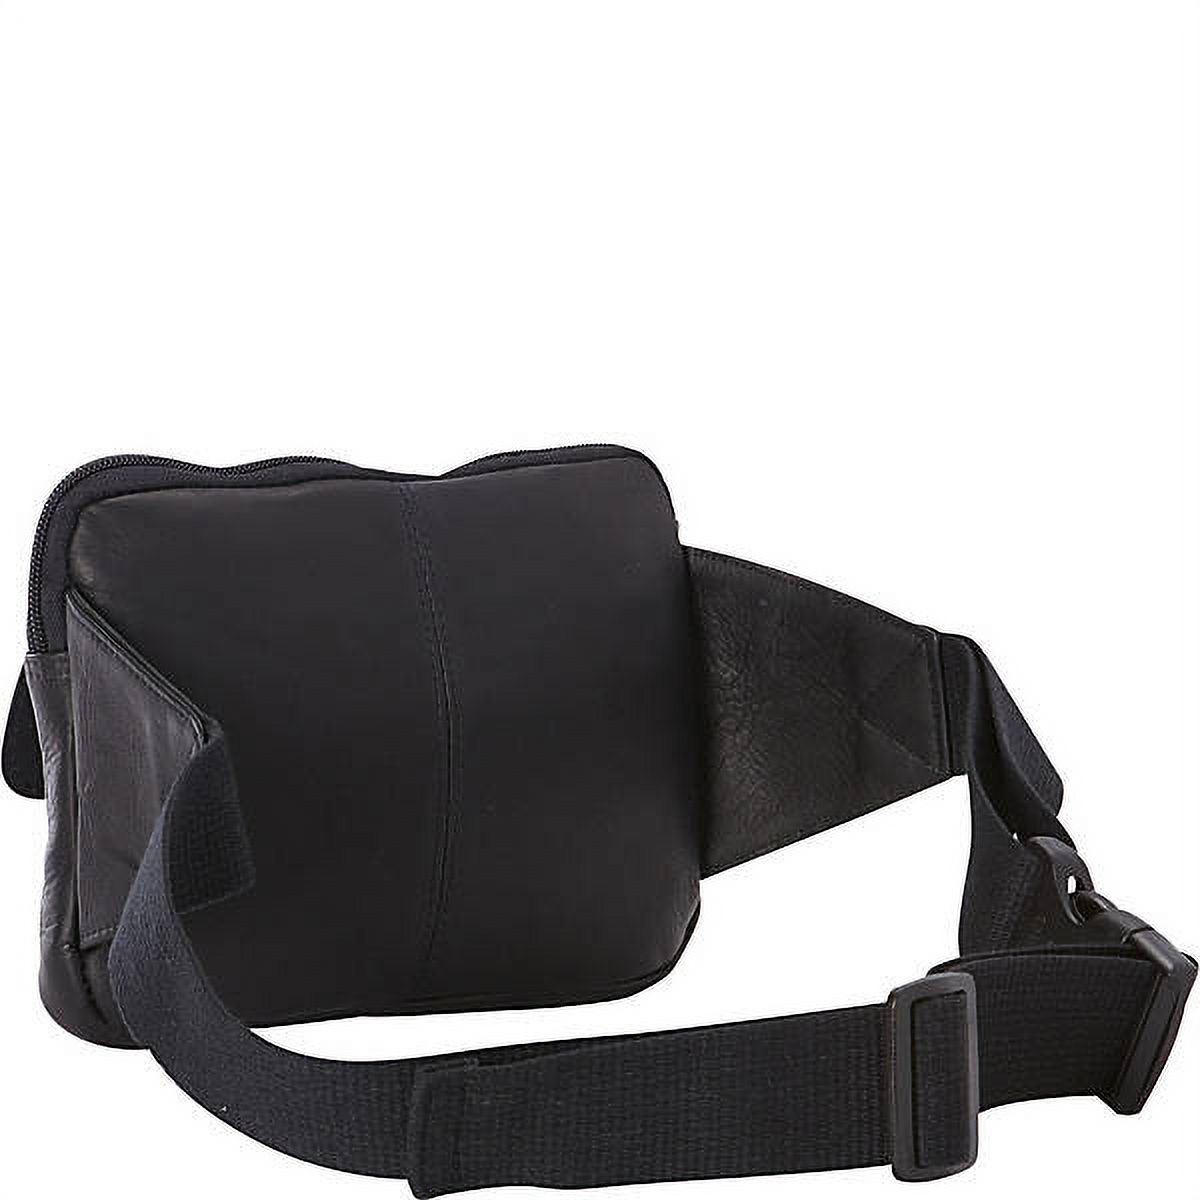 Le Donne Leather Journey Waist Bag LD-9880 - image 2 of 2